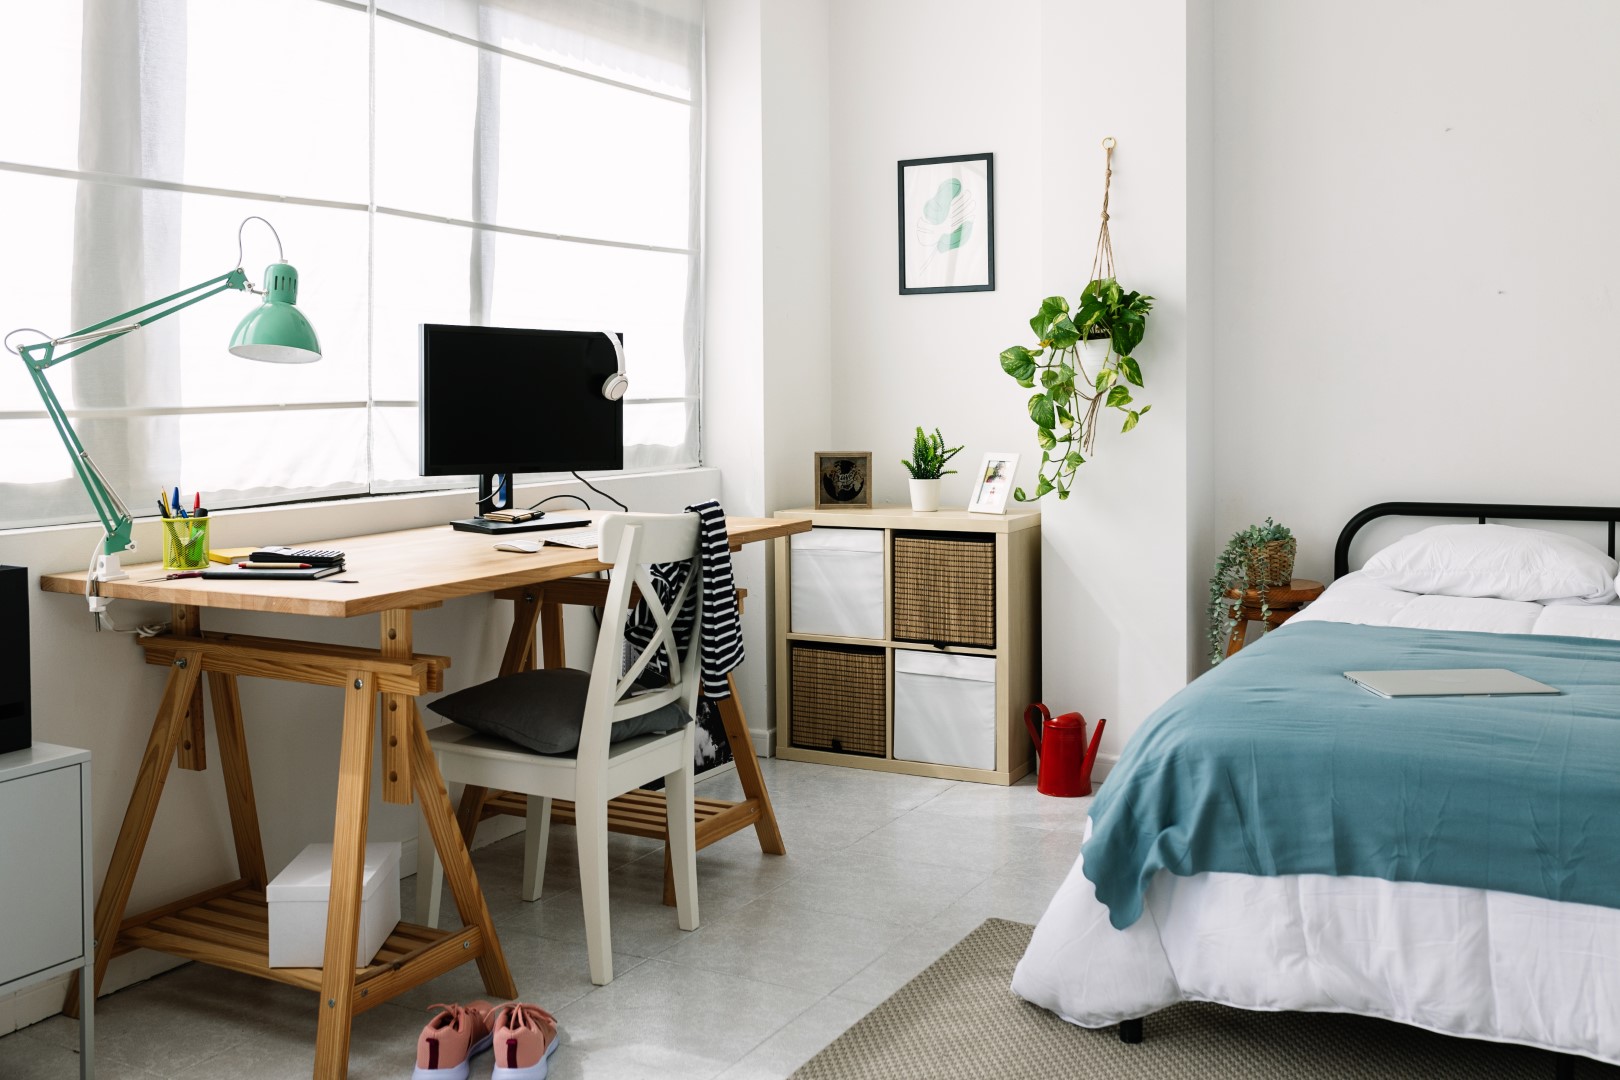 Cozy Interior Teenage Room With Bed And Desk 2022 12 09 04 35 14 Utc